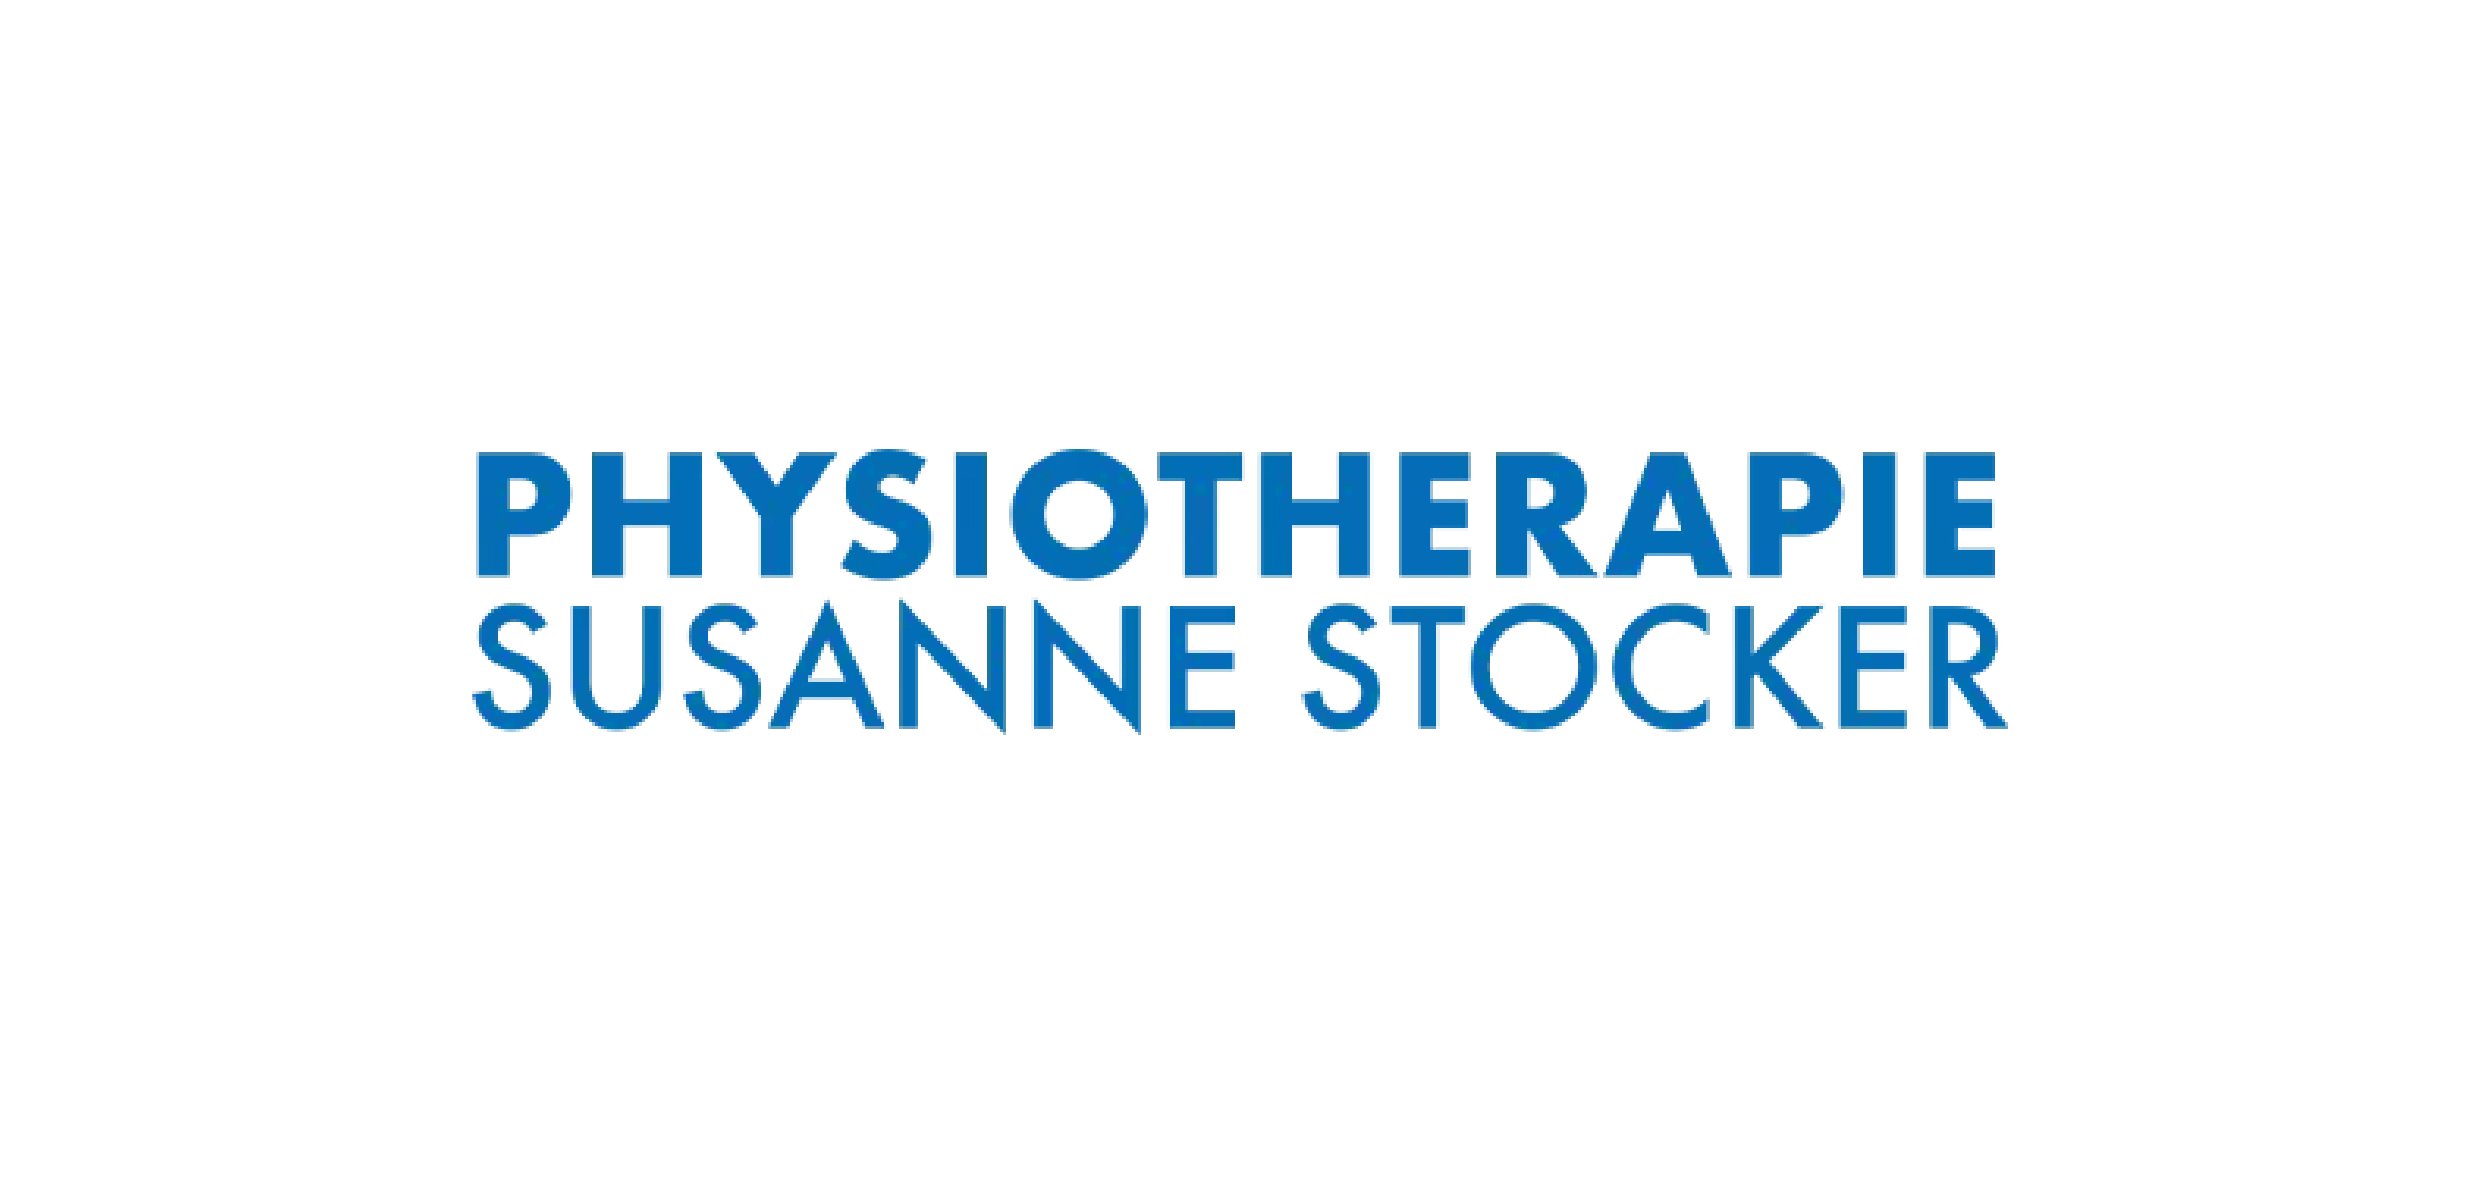 Physiotherapie Susanne Stocker - Webdesign